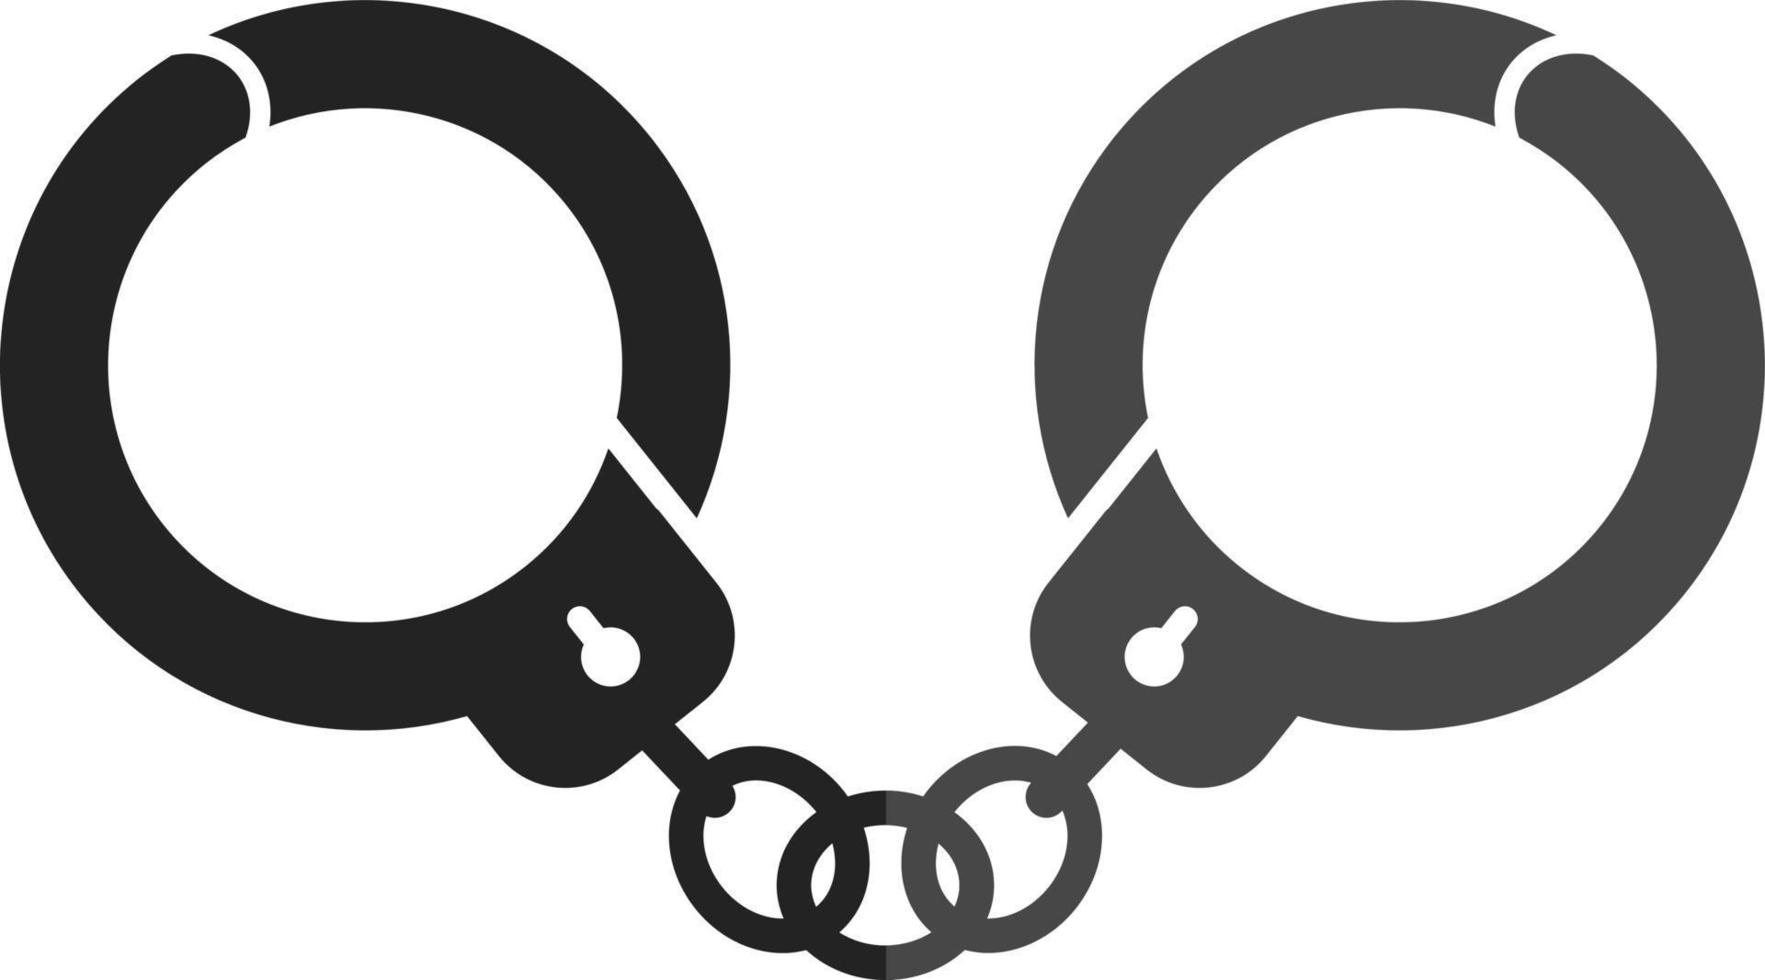 Ploce handcuffs, illustration, vector on white background.